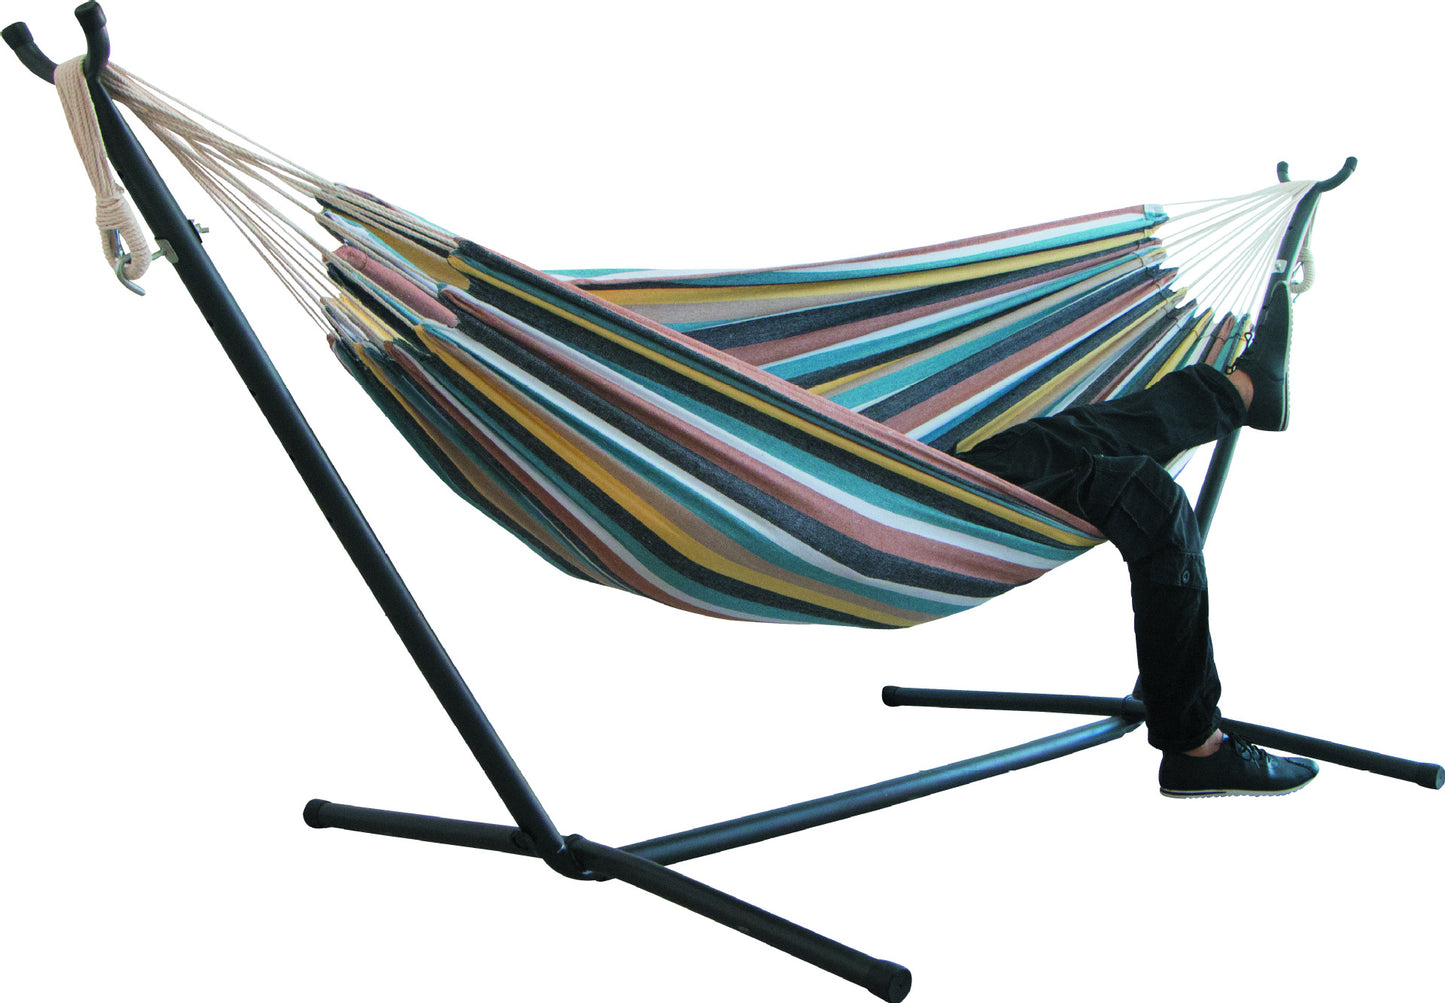 Canvas camping hammock